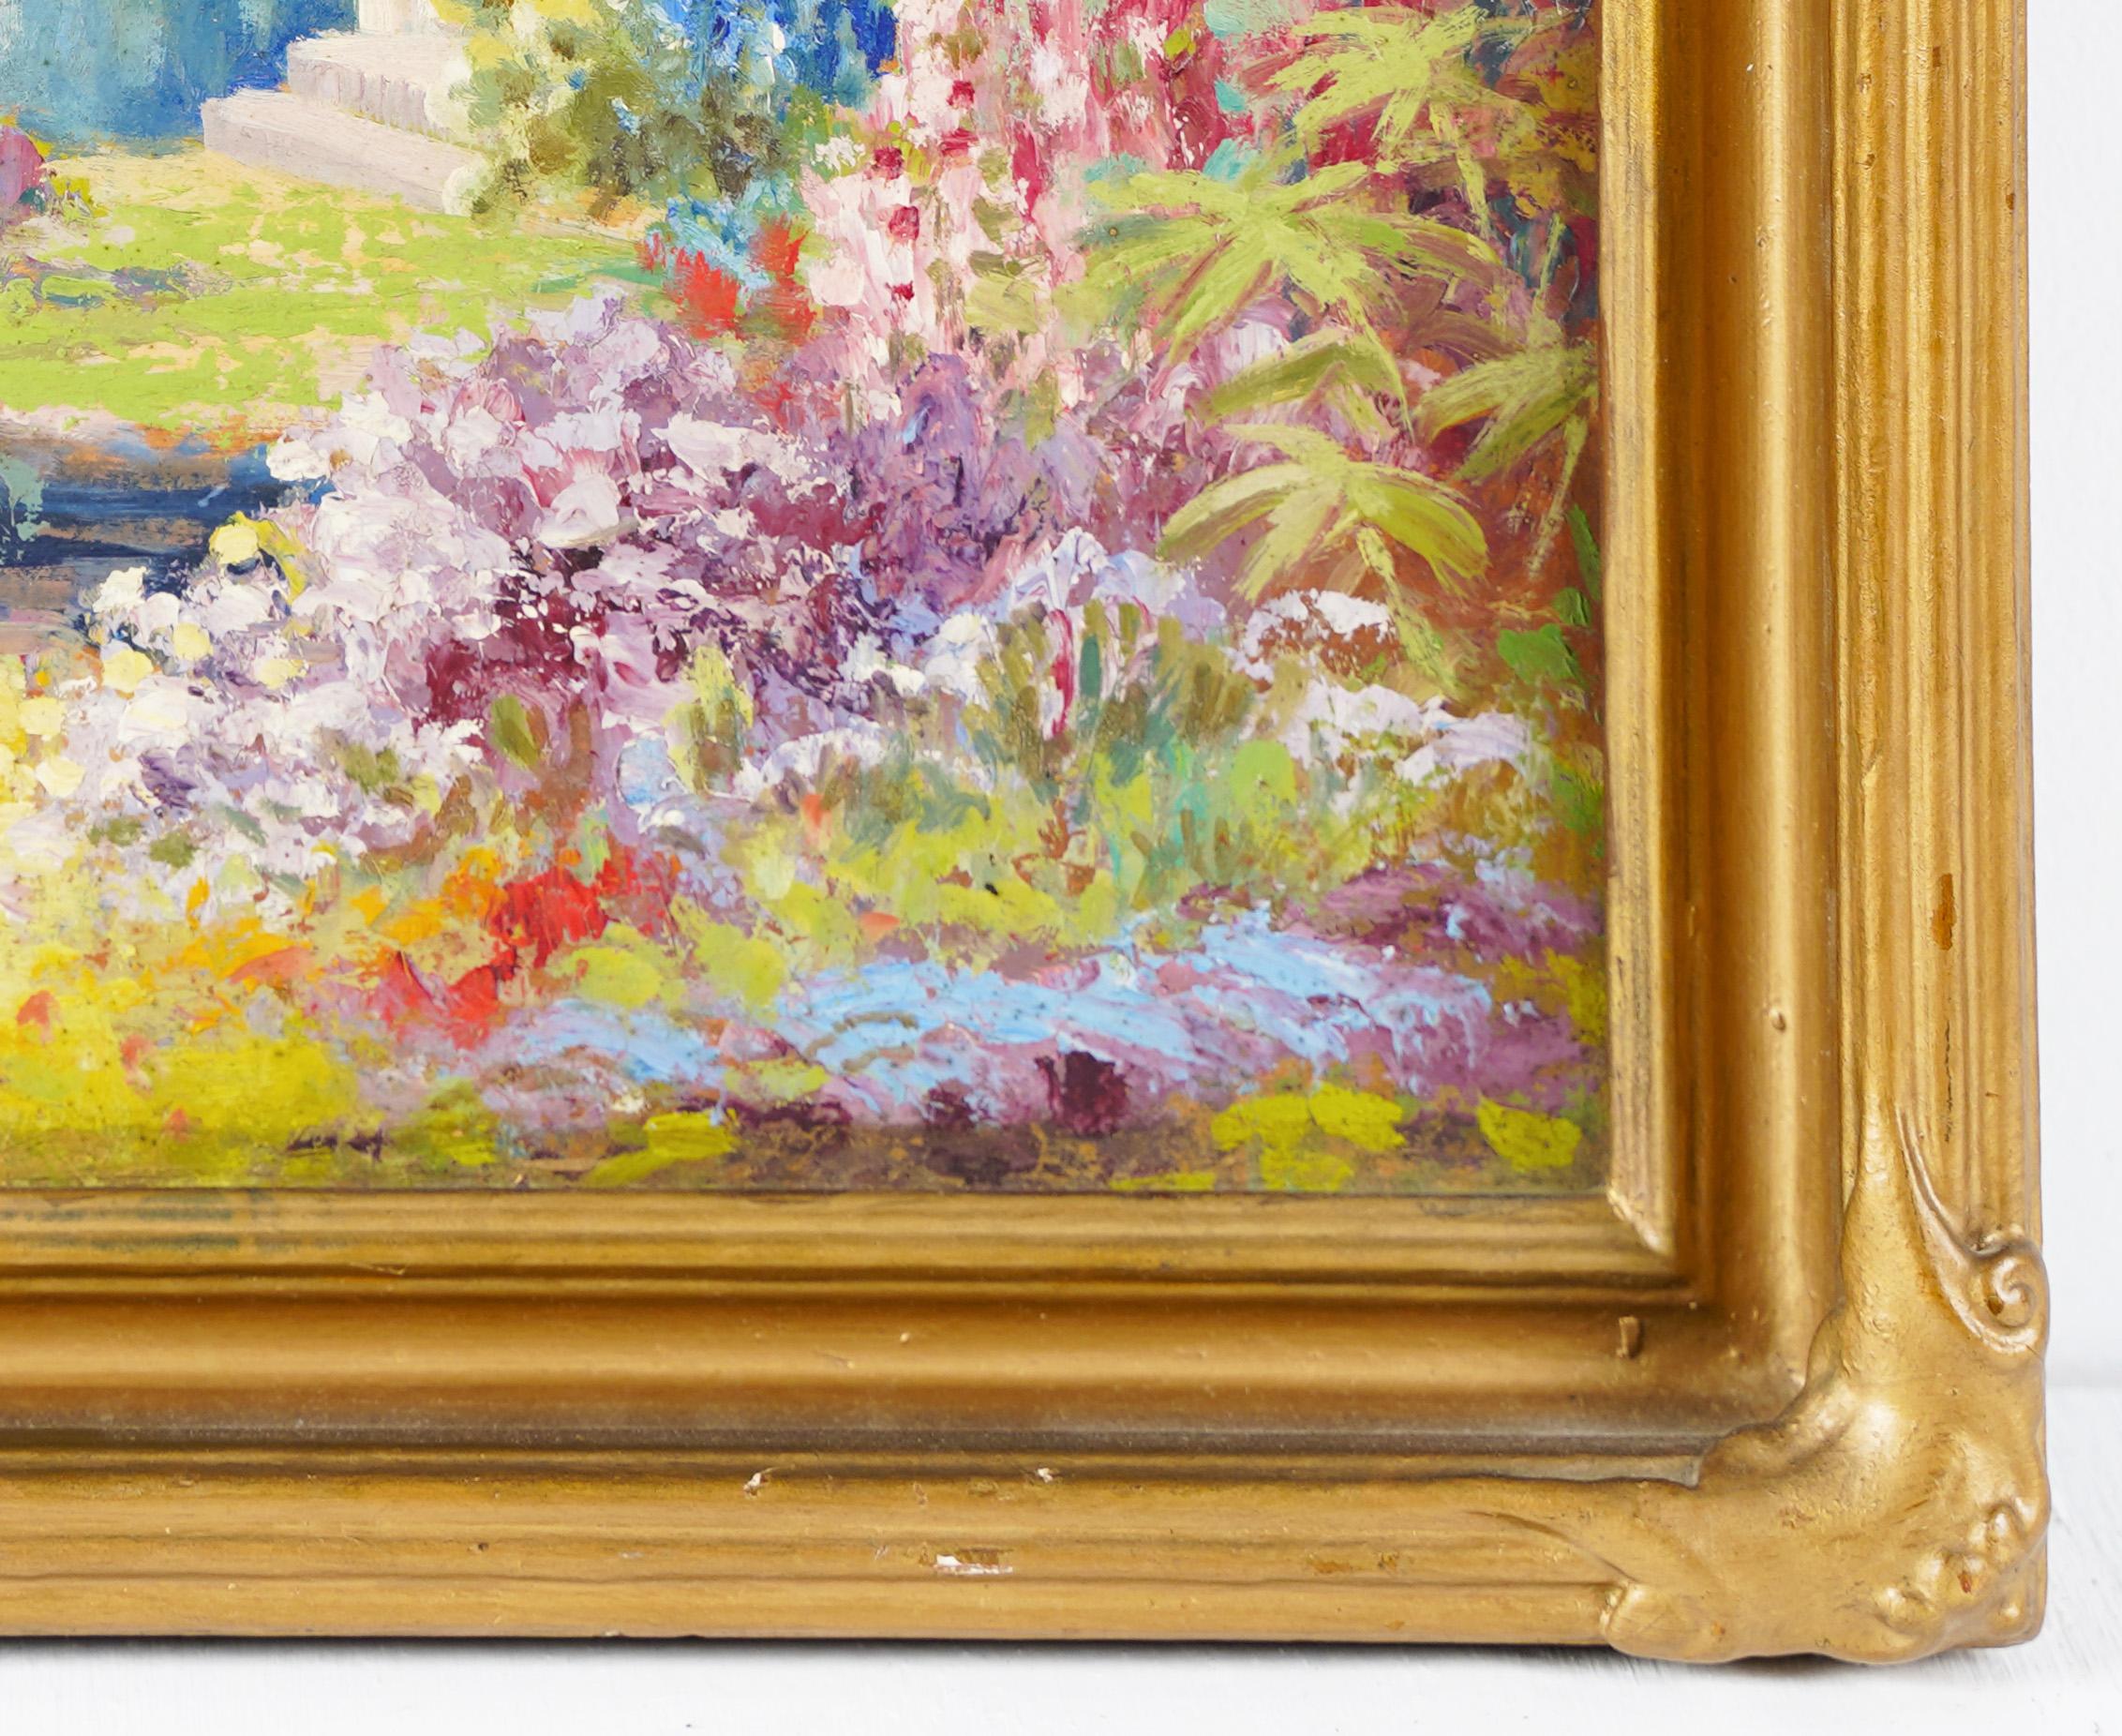 Antique American impressionist flower landscape painting by Arthur William Best (1859 - 1935).  Oil on board.  Signed.  Framed.  Image size, 14L x 10H.